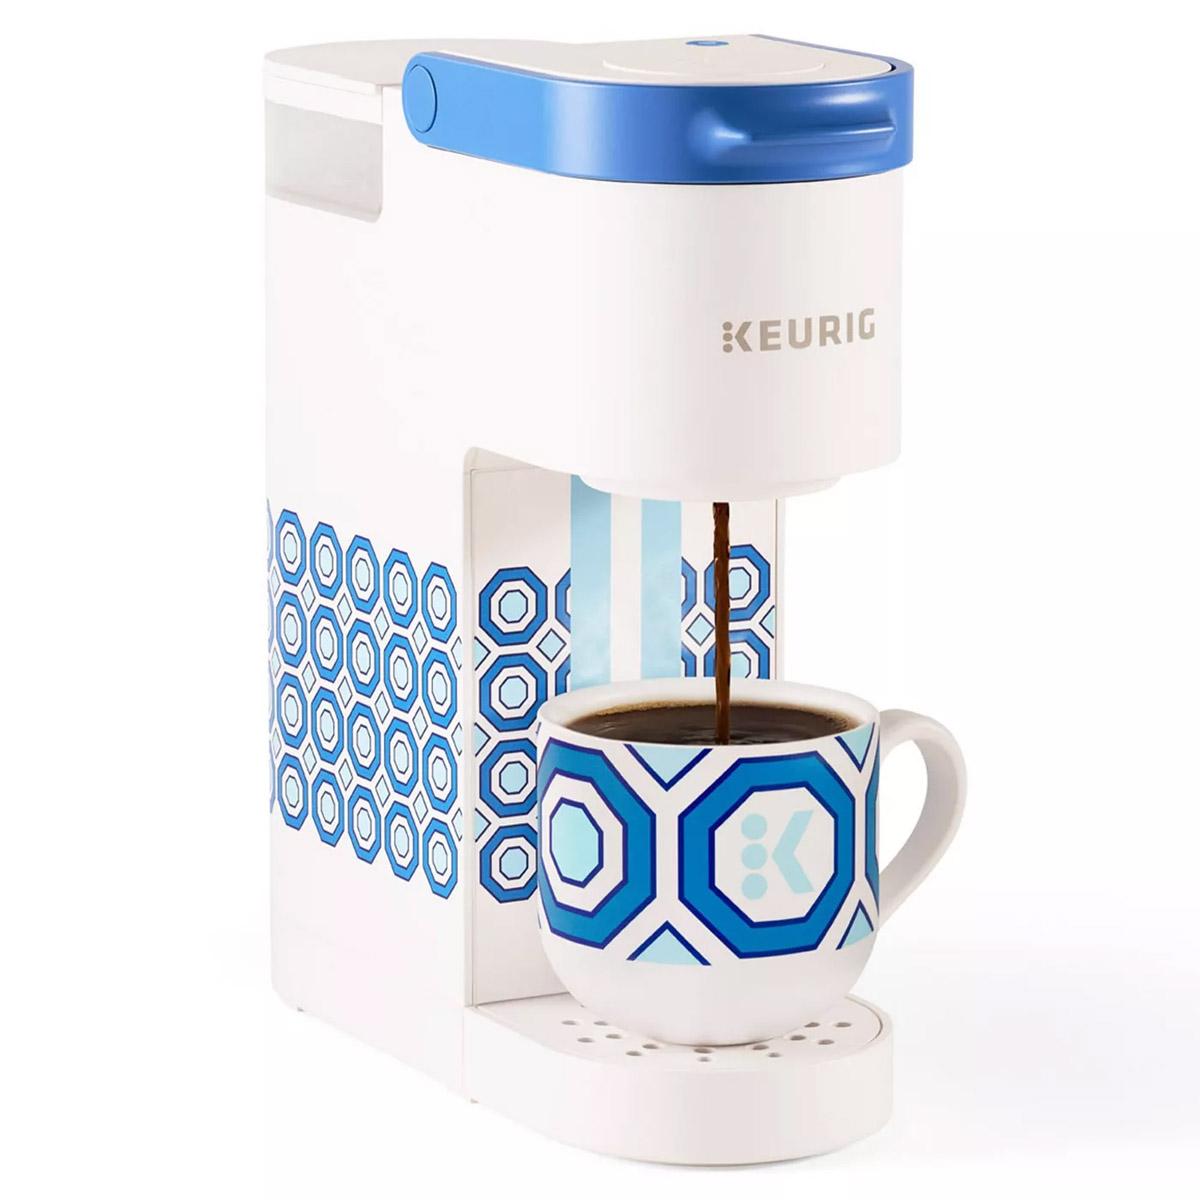 Keurig K-Mini Jonathan Adler Single-Serve K-Cup Pod Coffee Maker for $49.99 Shipped